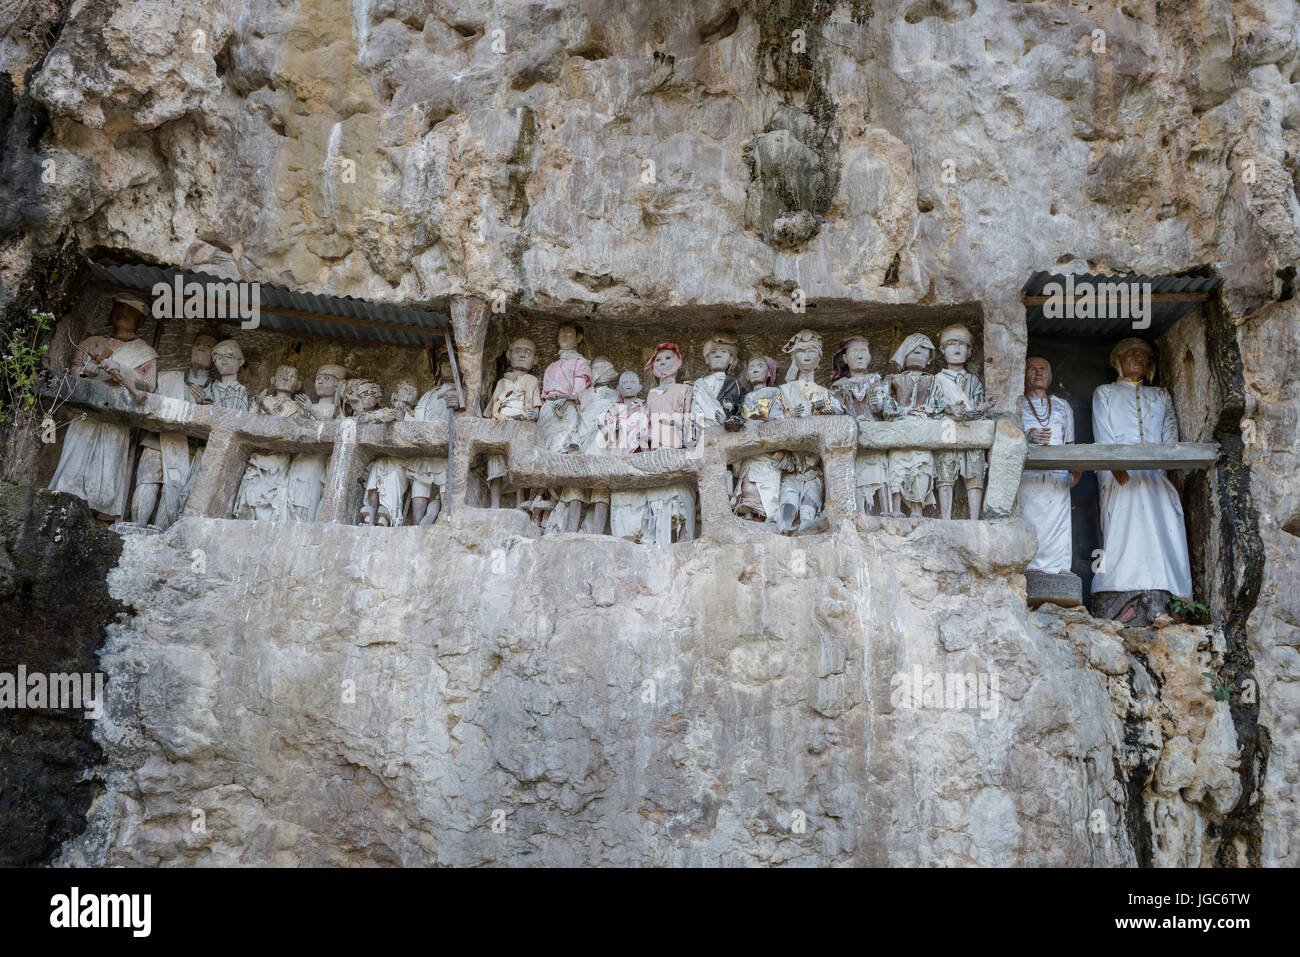 Cliff Torajan entierro efigie figuras (tau tau) Tana Toraja de Sulawesi, Indonesia Foto de stock